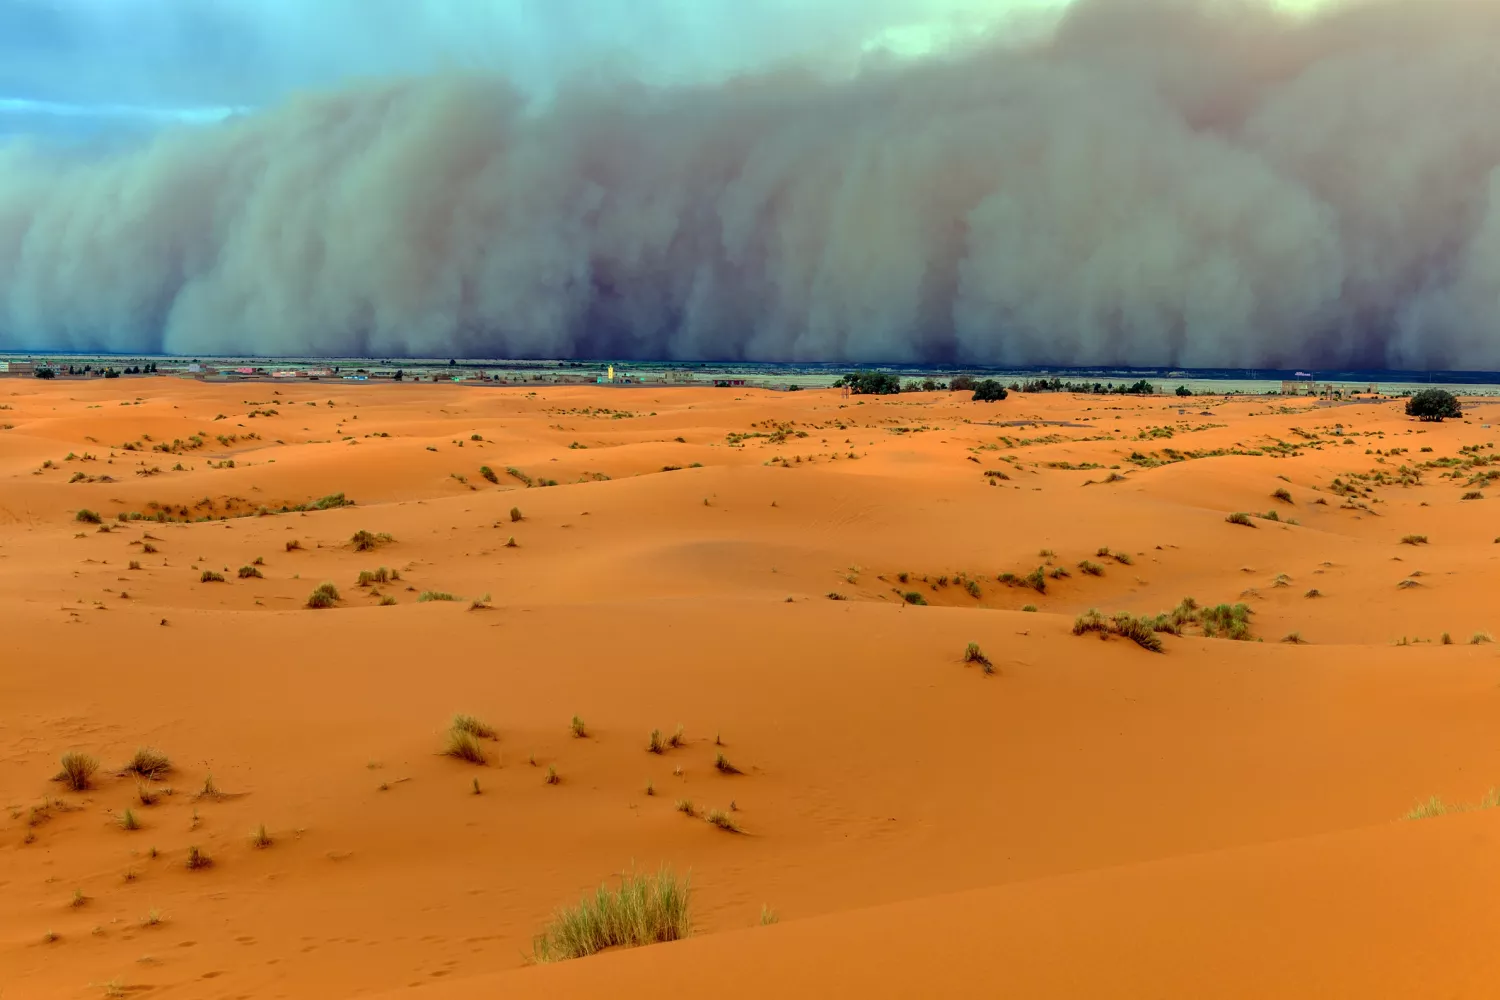 A wide sandstorm